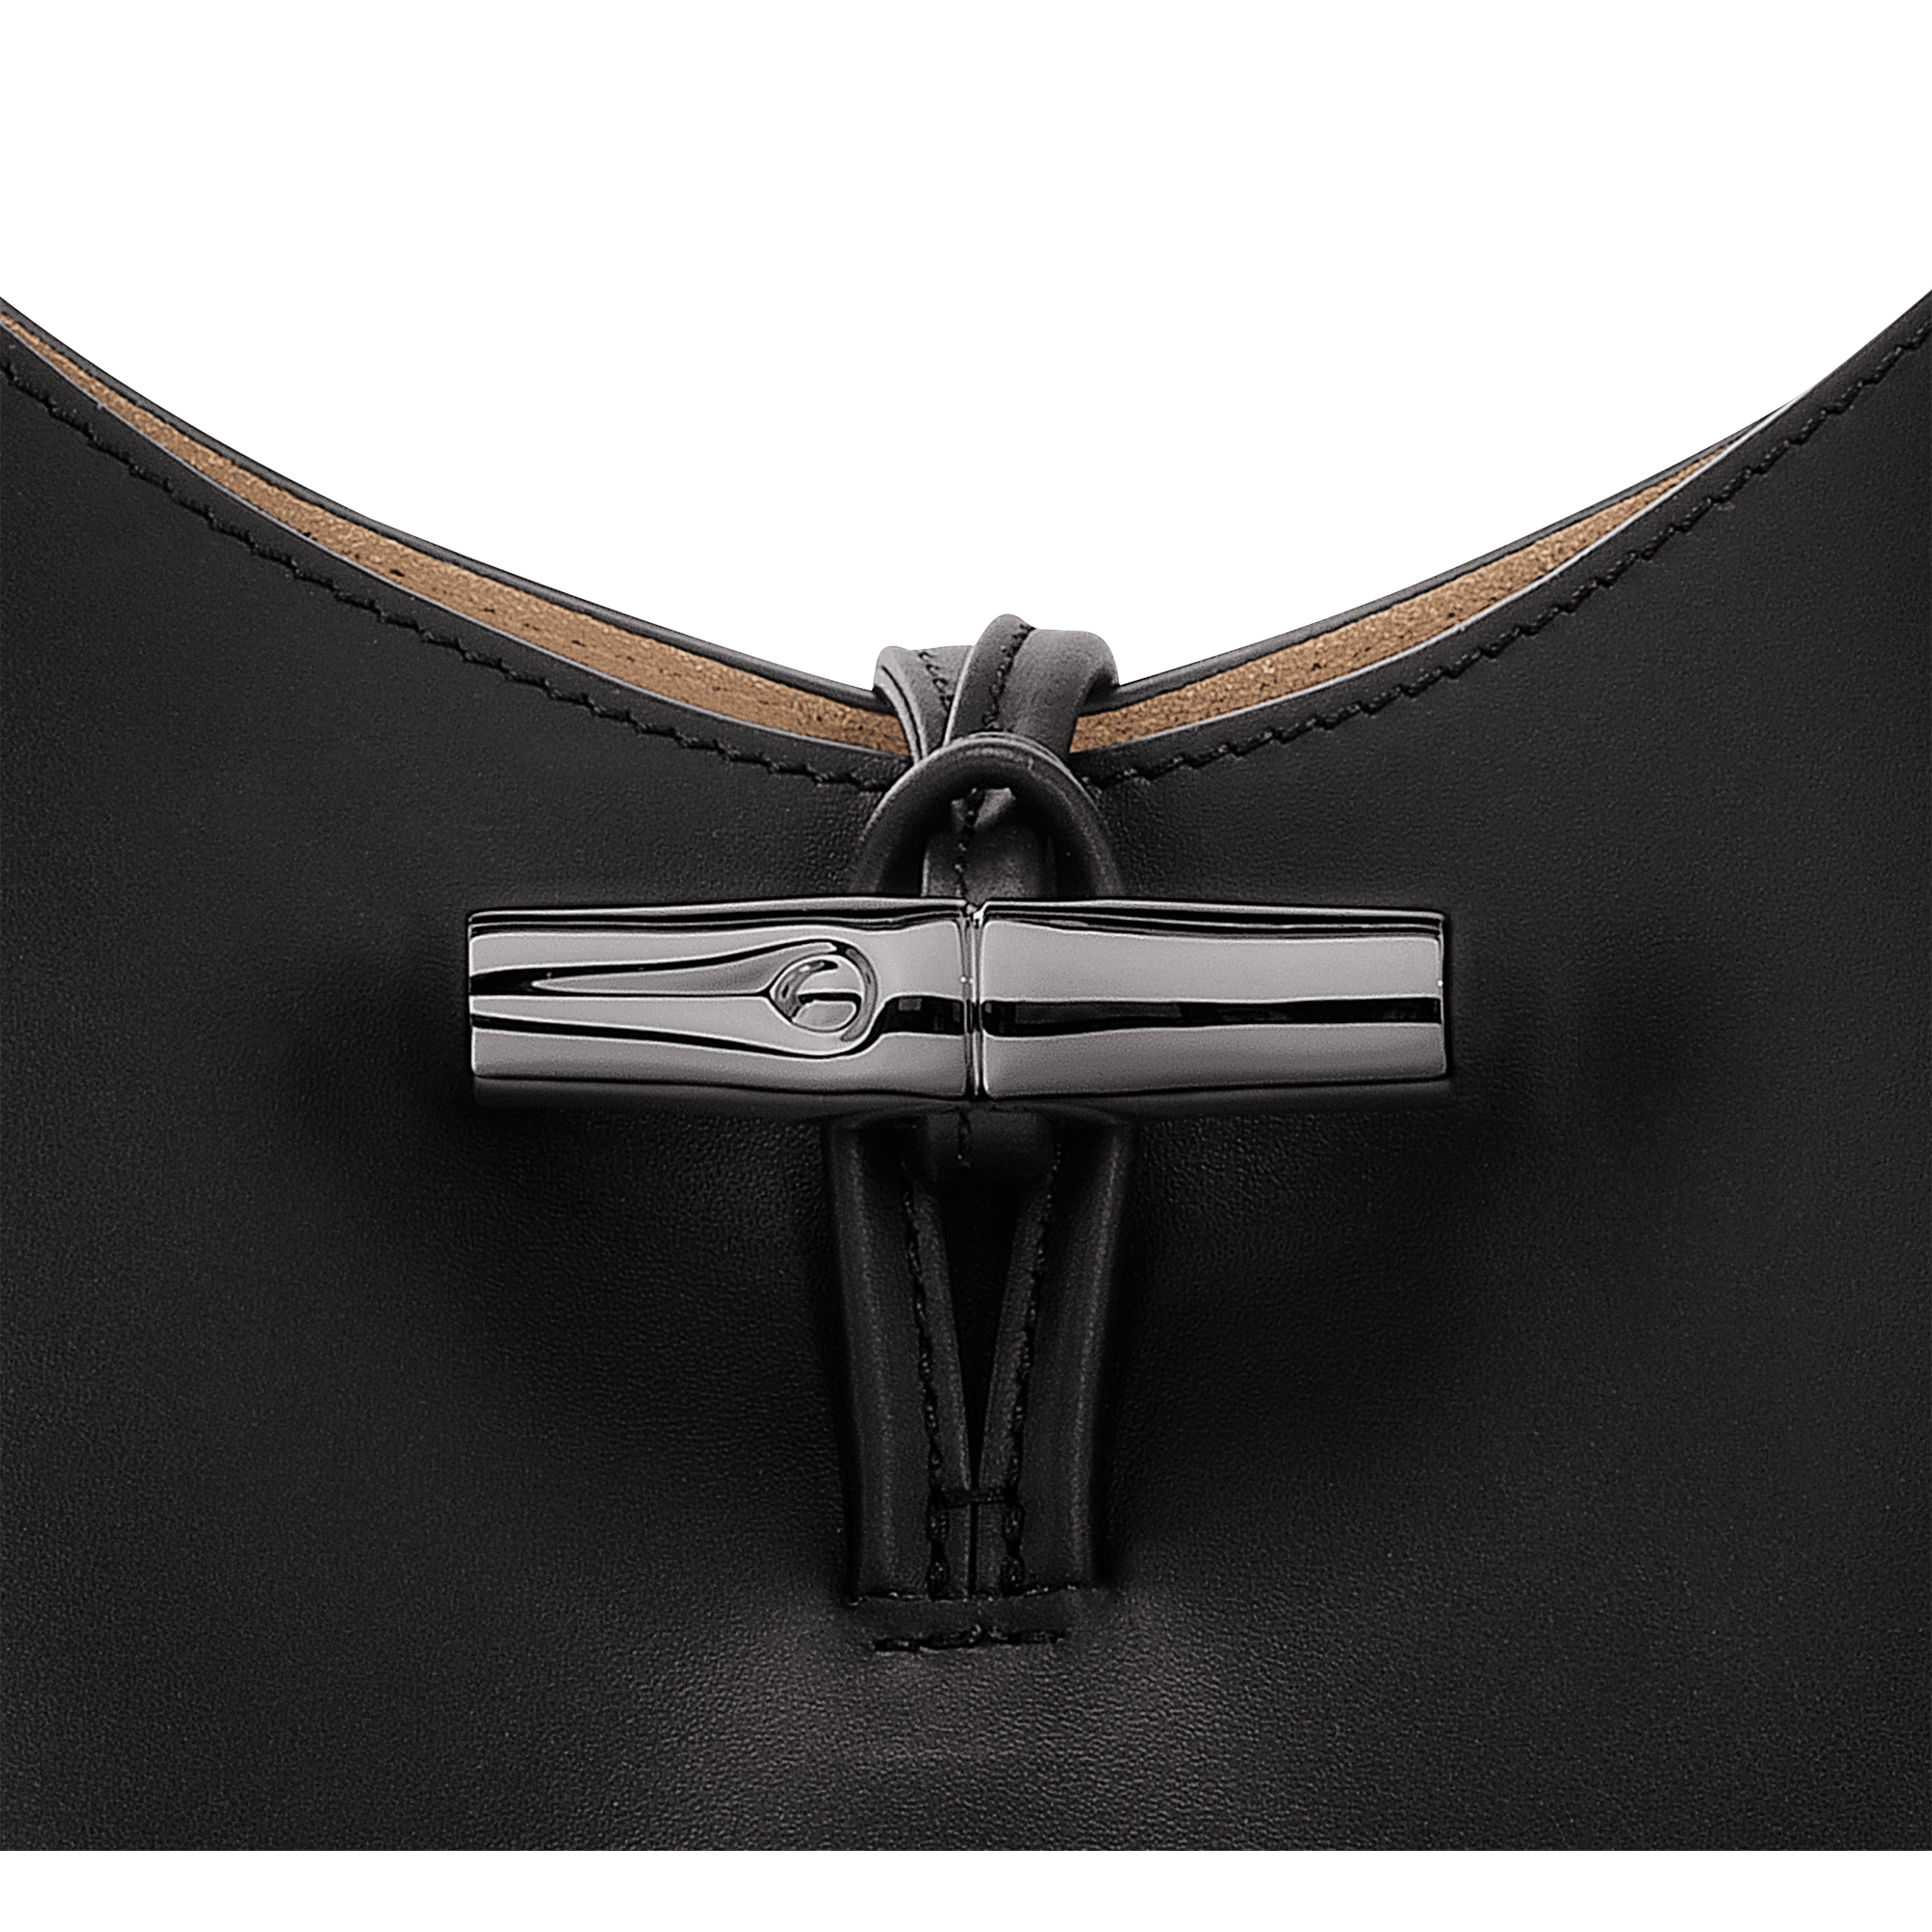 Roseau Essential M Hobo bag Black - Leather (10218968001